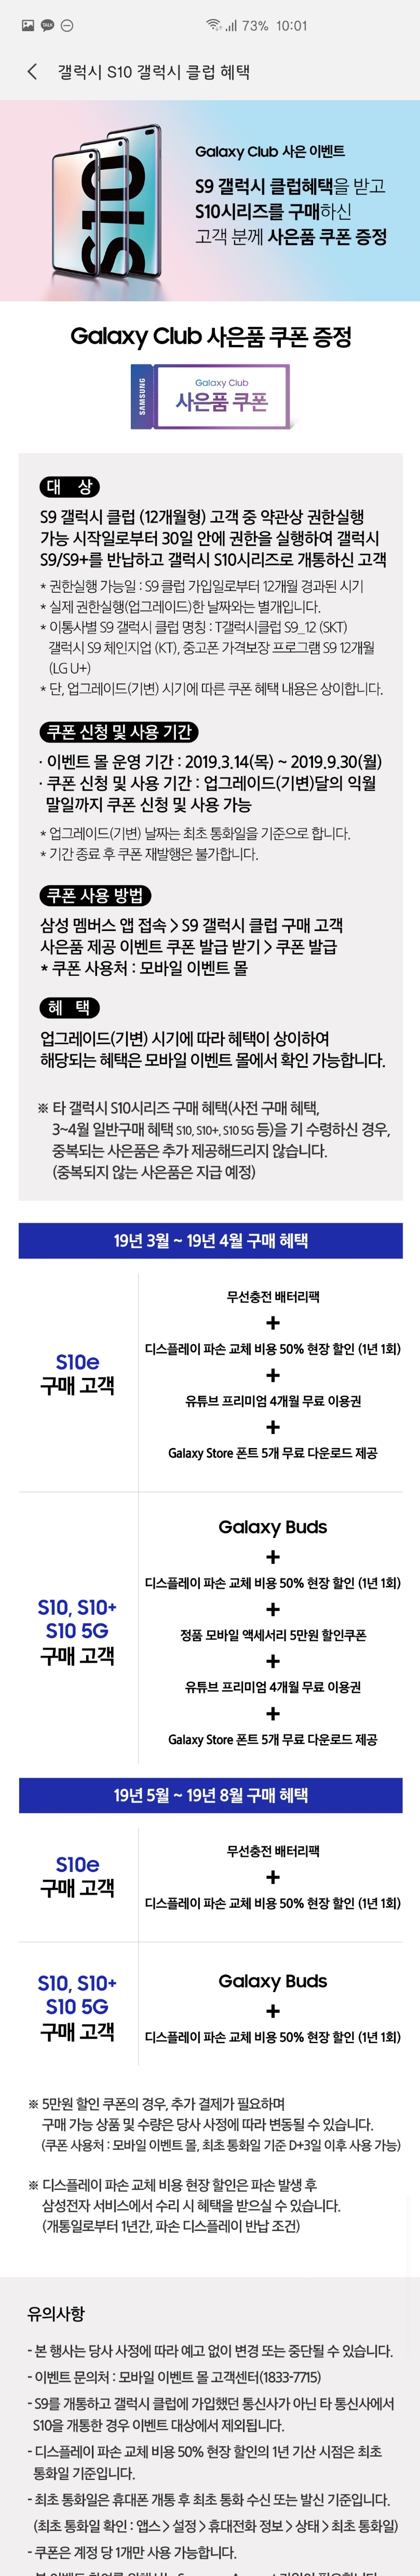 Screenshot_20190315-100158_Samsung Members.jpg